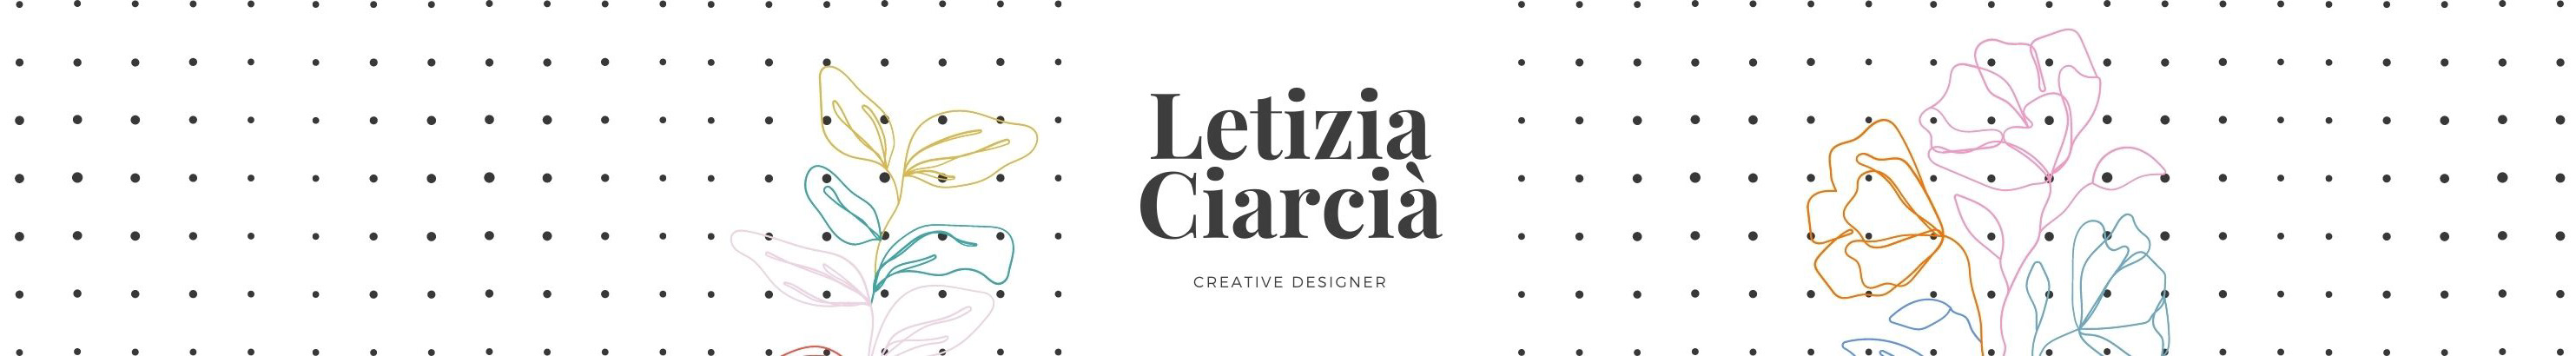 Letizia Ciarcià profil başlığı